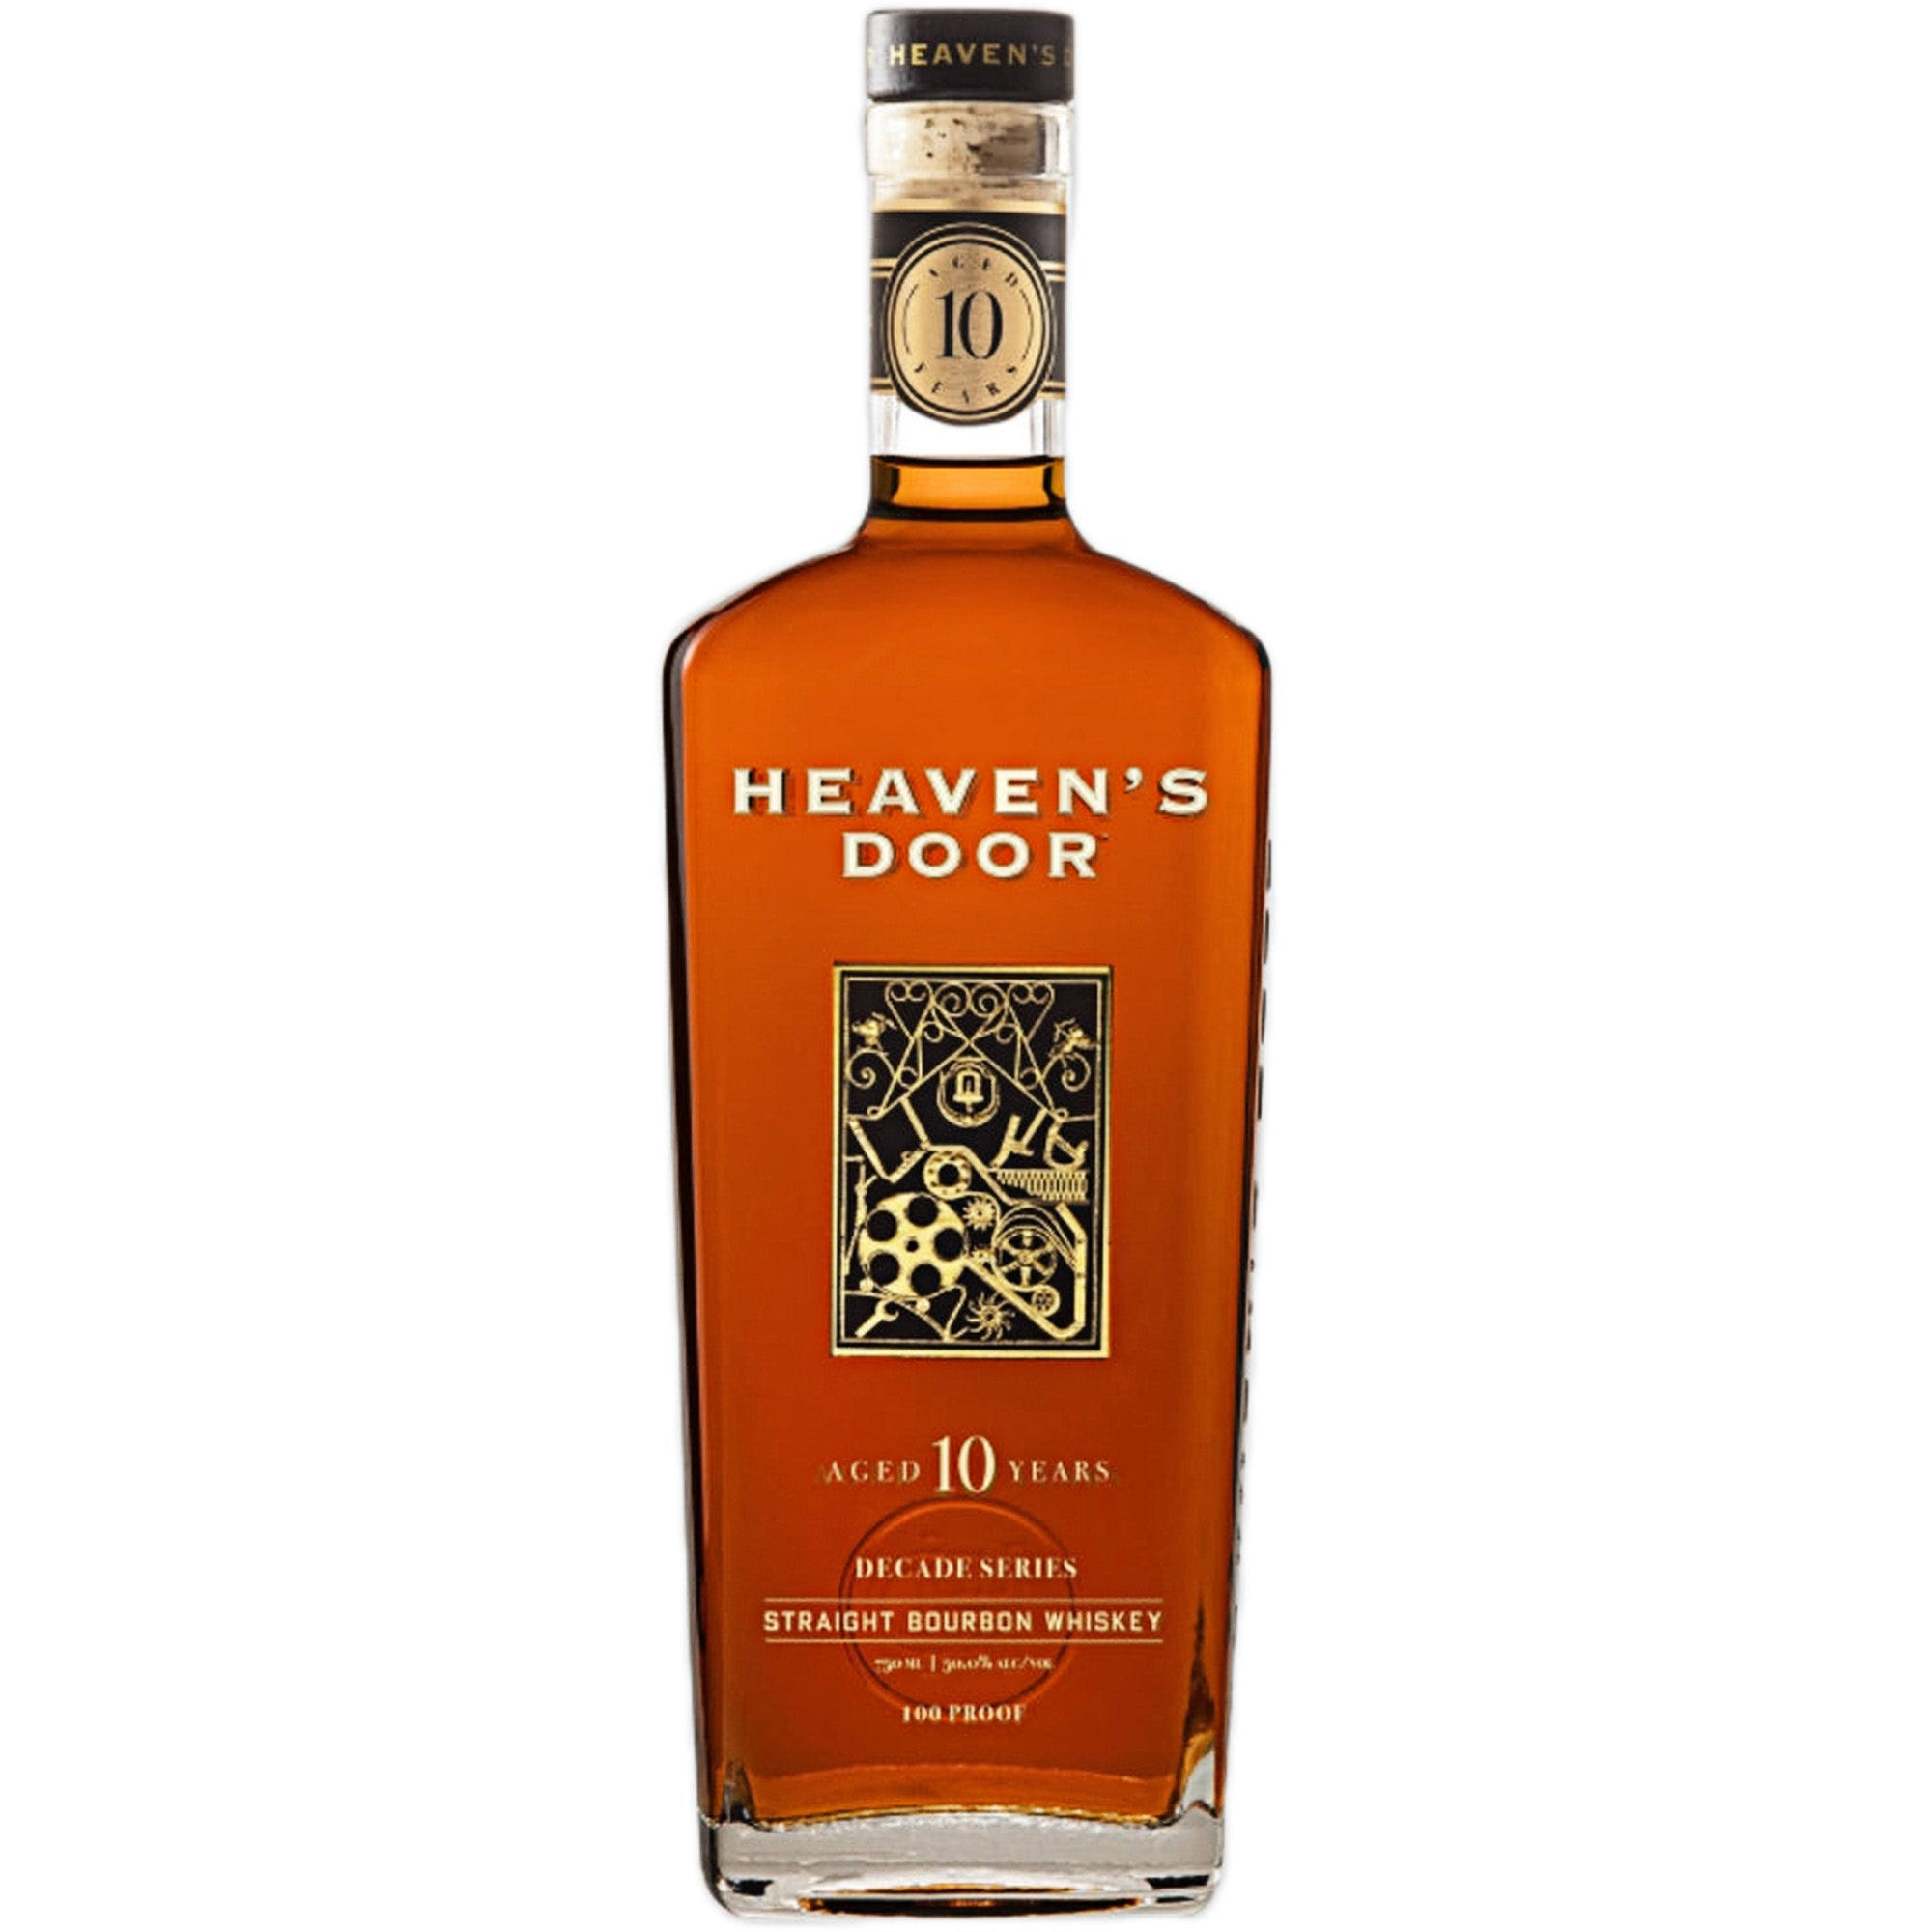 Heaven's Door Decade Series 10 Year Old Straight Bourbon Whiskey 750ml Bottle